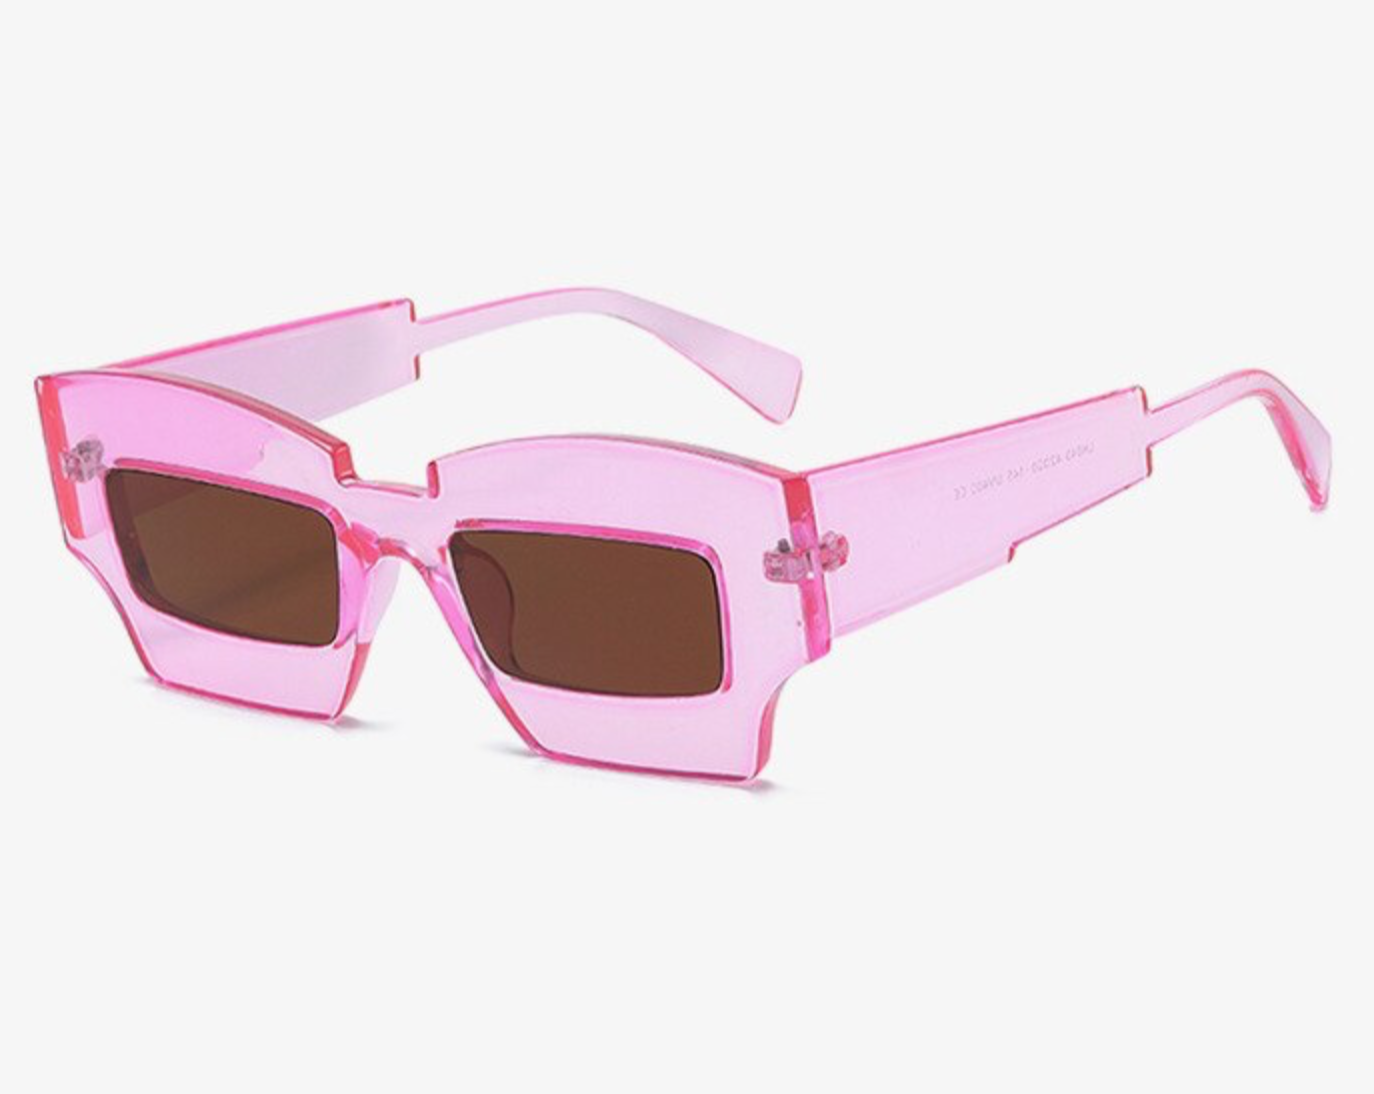 Millionaire Glasses Pink